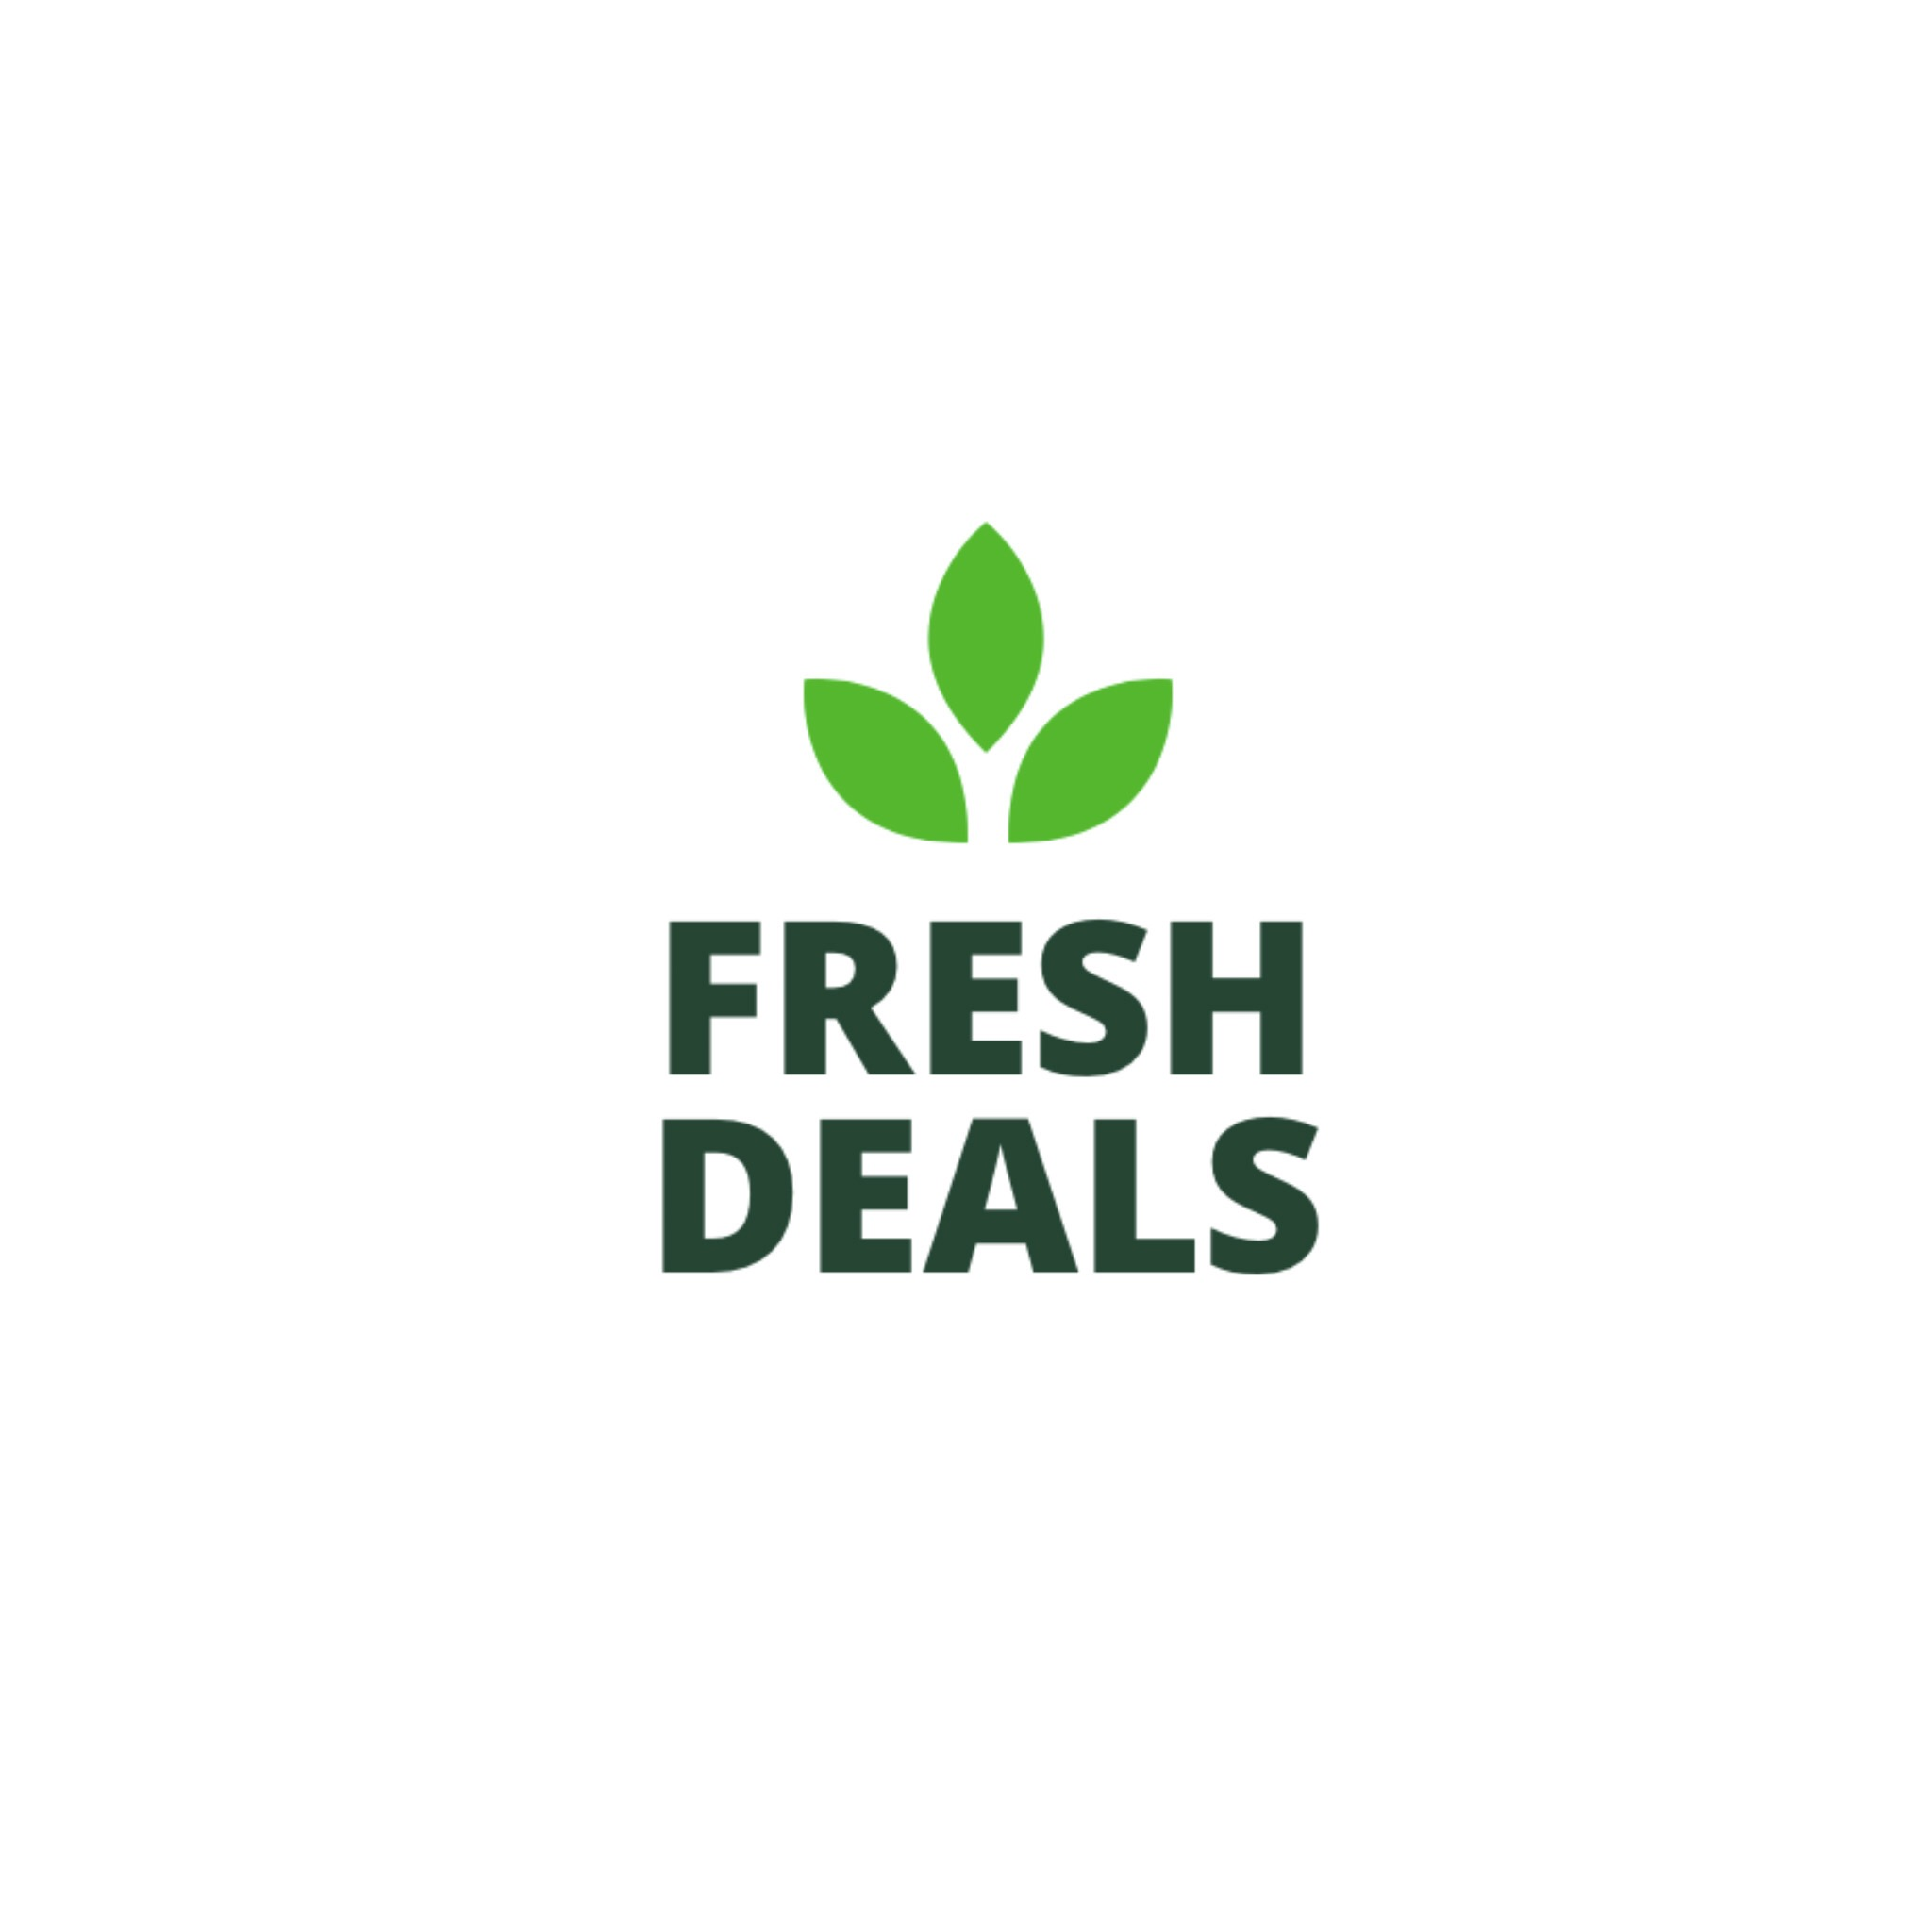 download amazon fresh deals